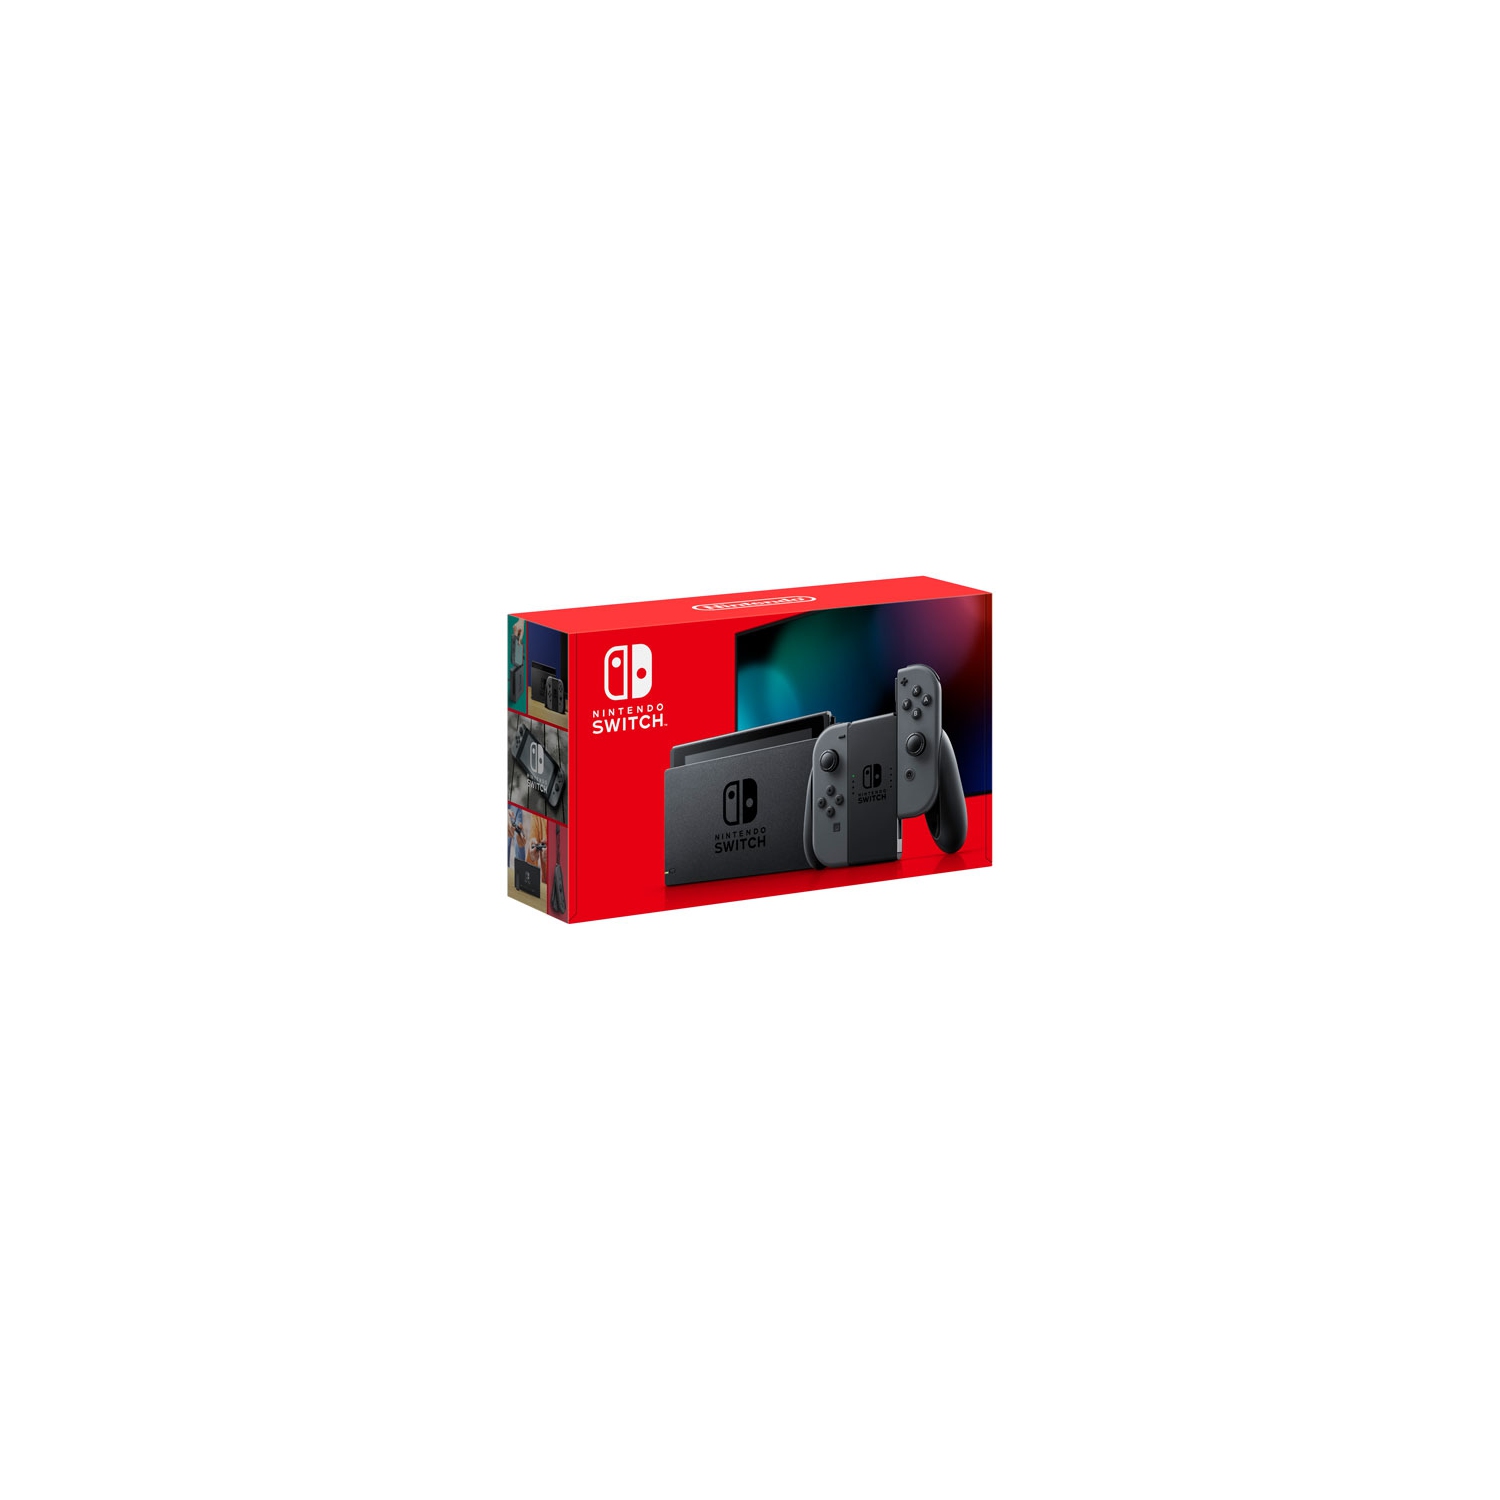 Open Box - Nintendo Switch Console with Grey Joy-Con